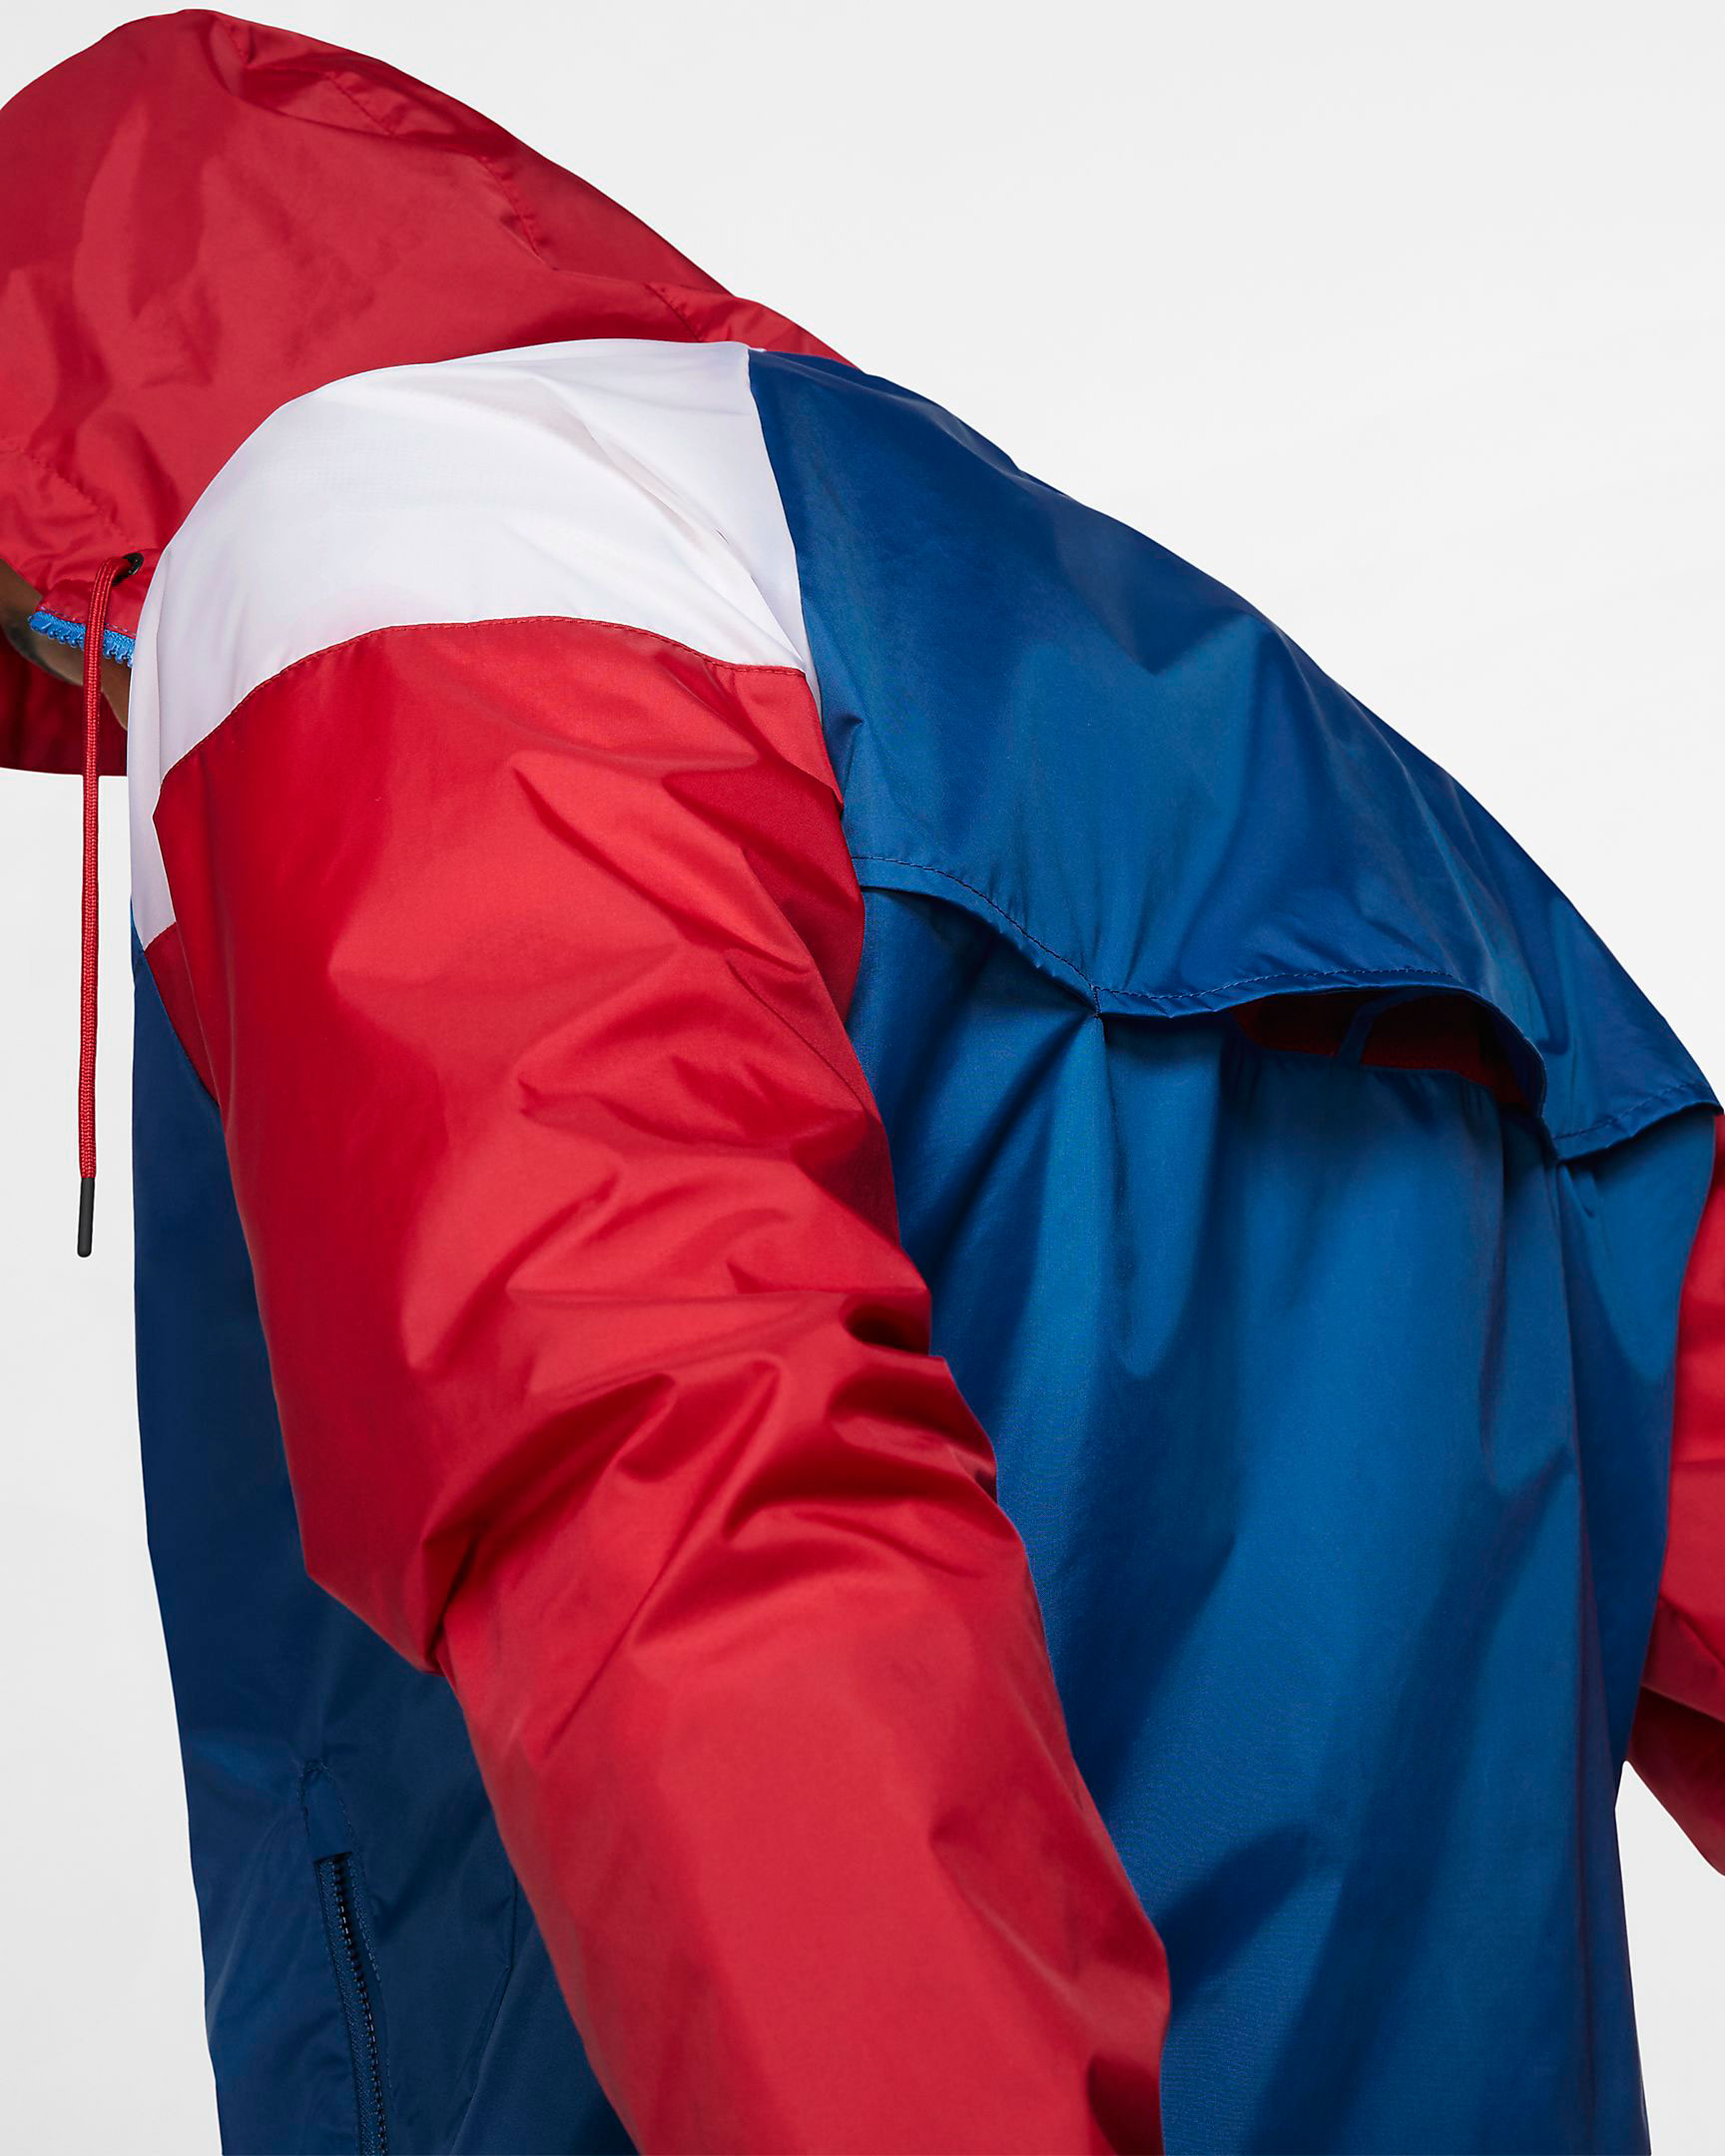 nike-americana-red-white-blue-windrunner-jacket-4